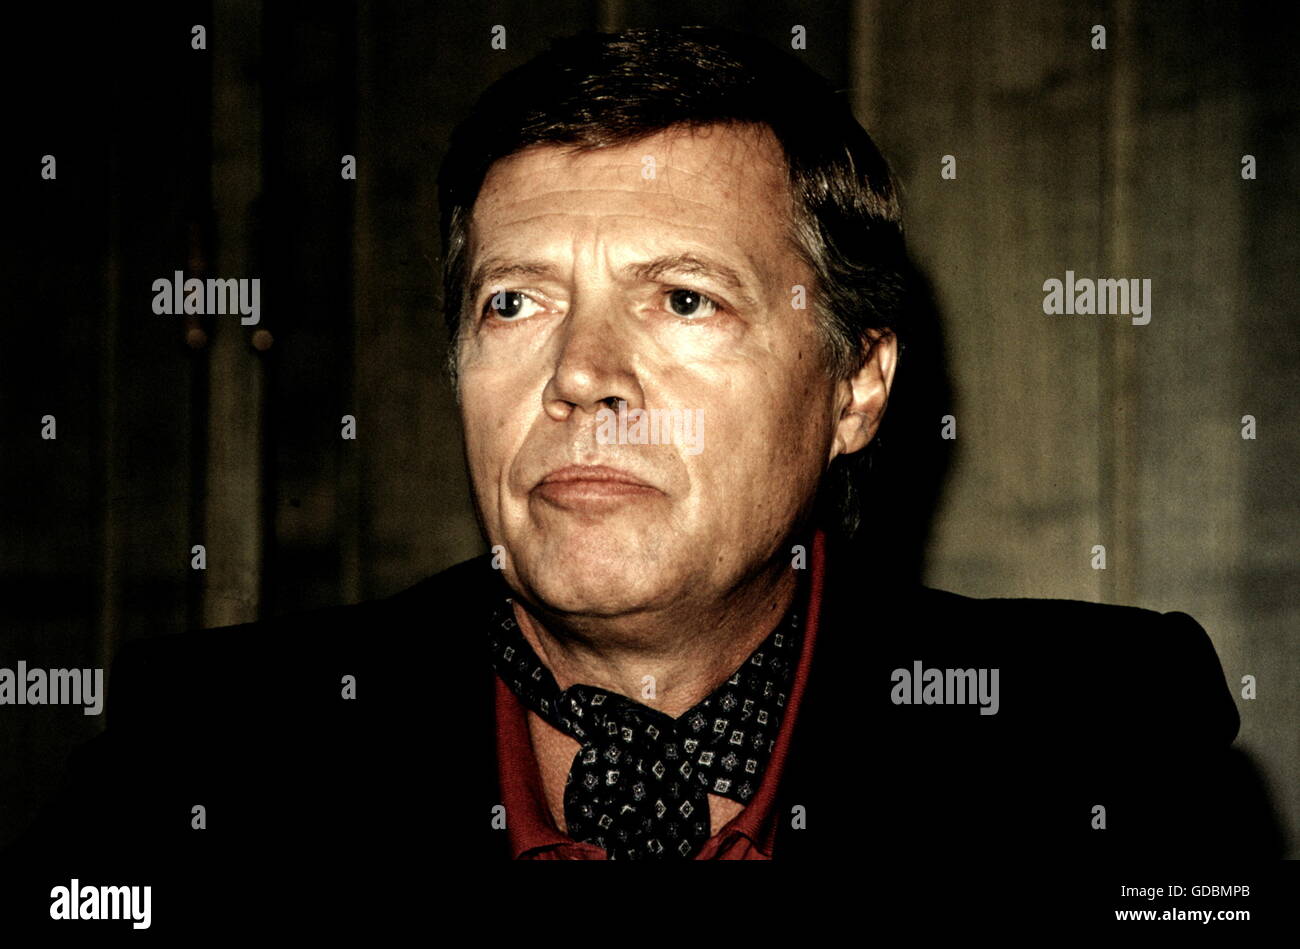 Boehm, KarlHeinz, * 16.3.1928, Austrian actor, portrait, 1980s, Stock Photo